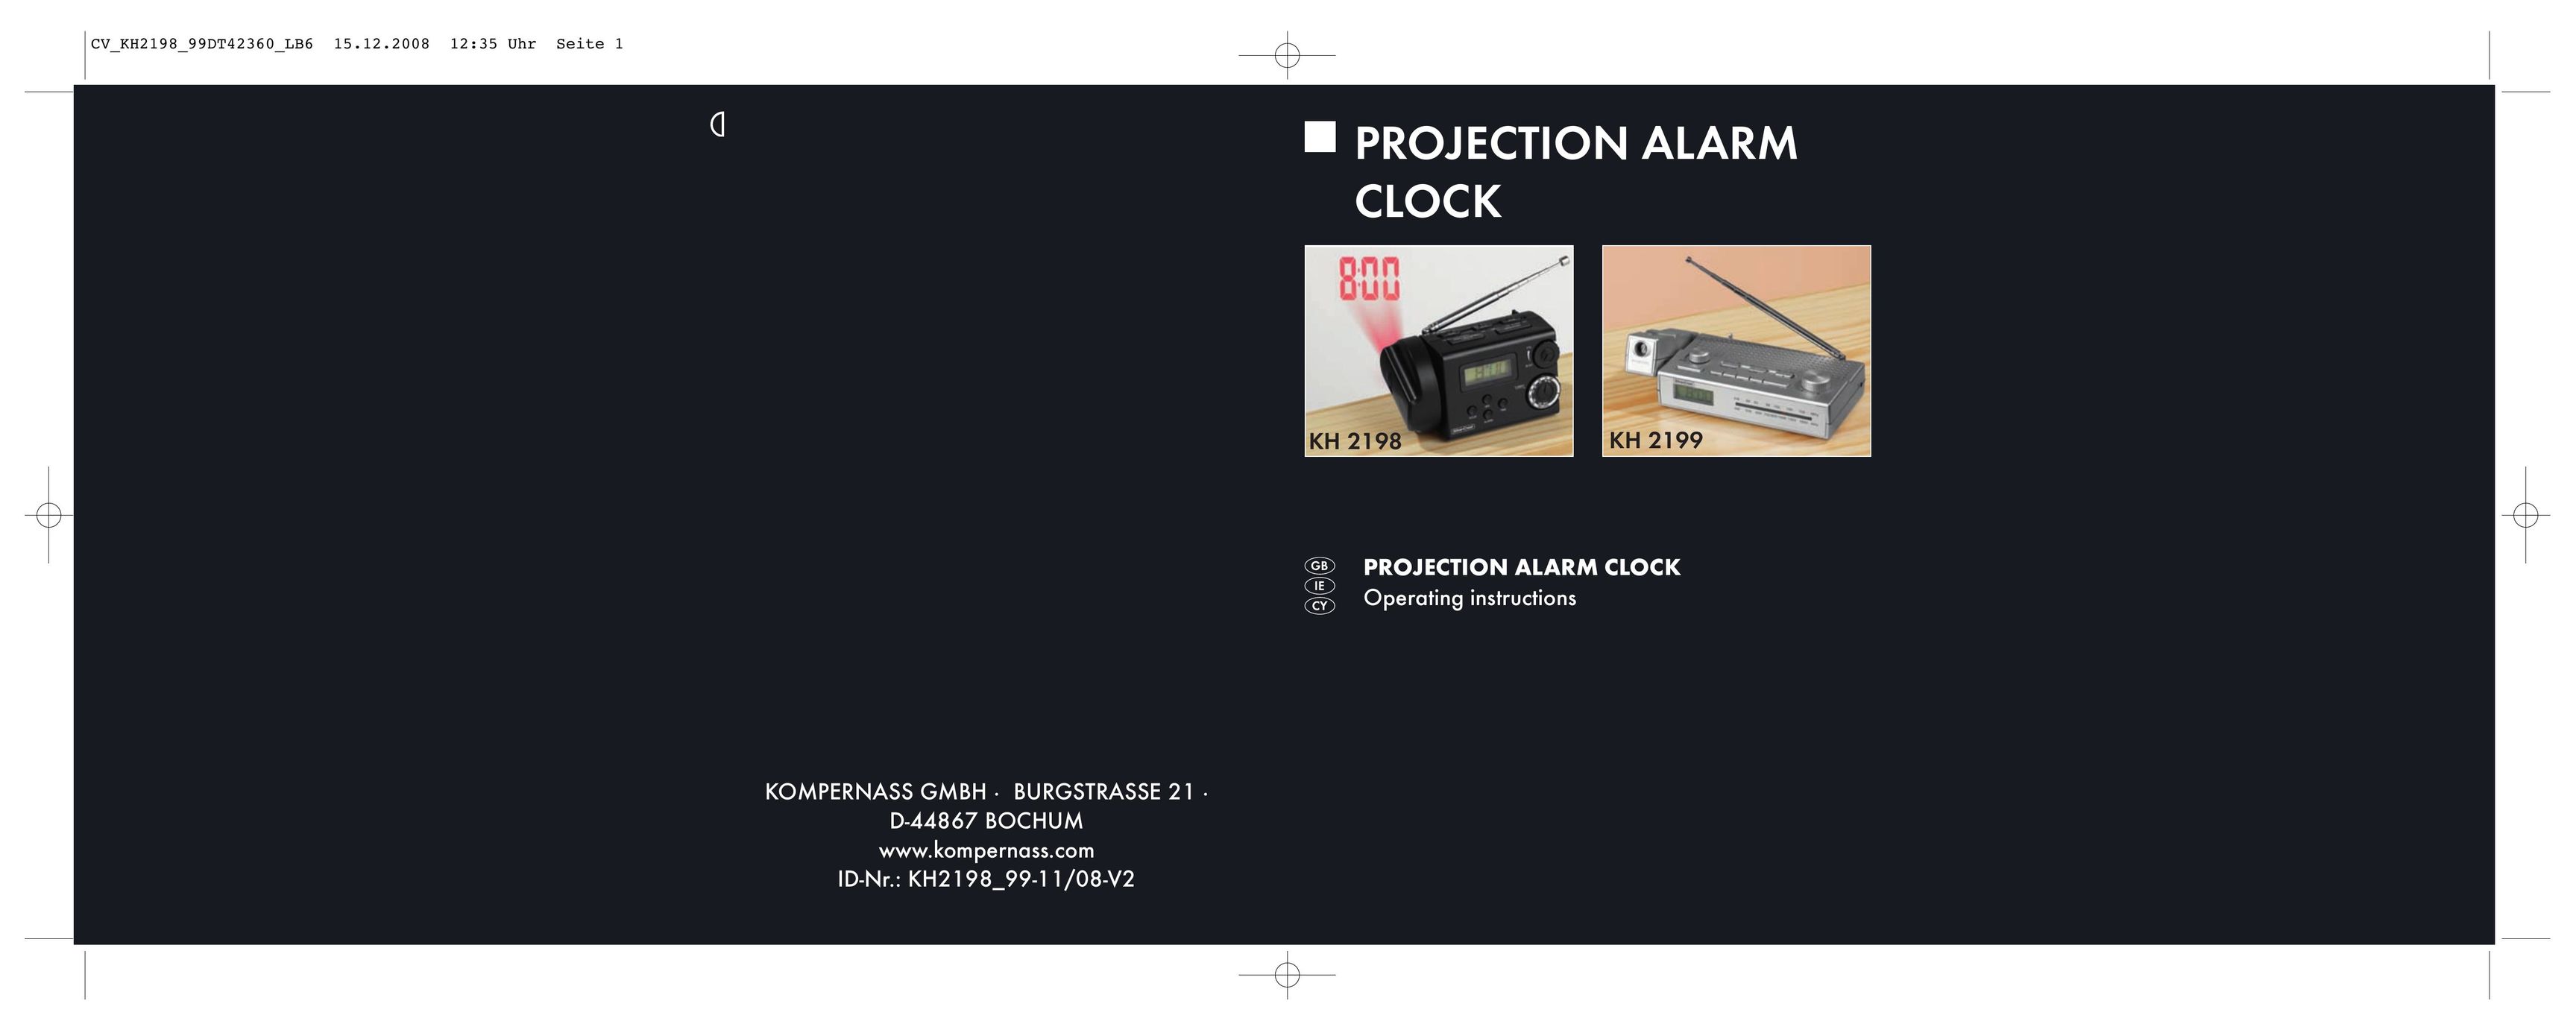 Kompernass KH 2198 Clock User Manual